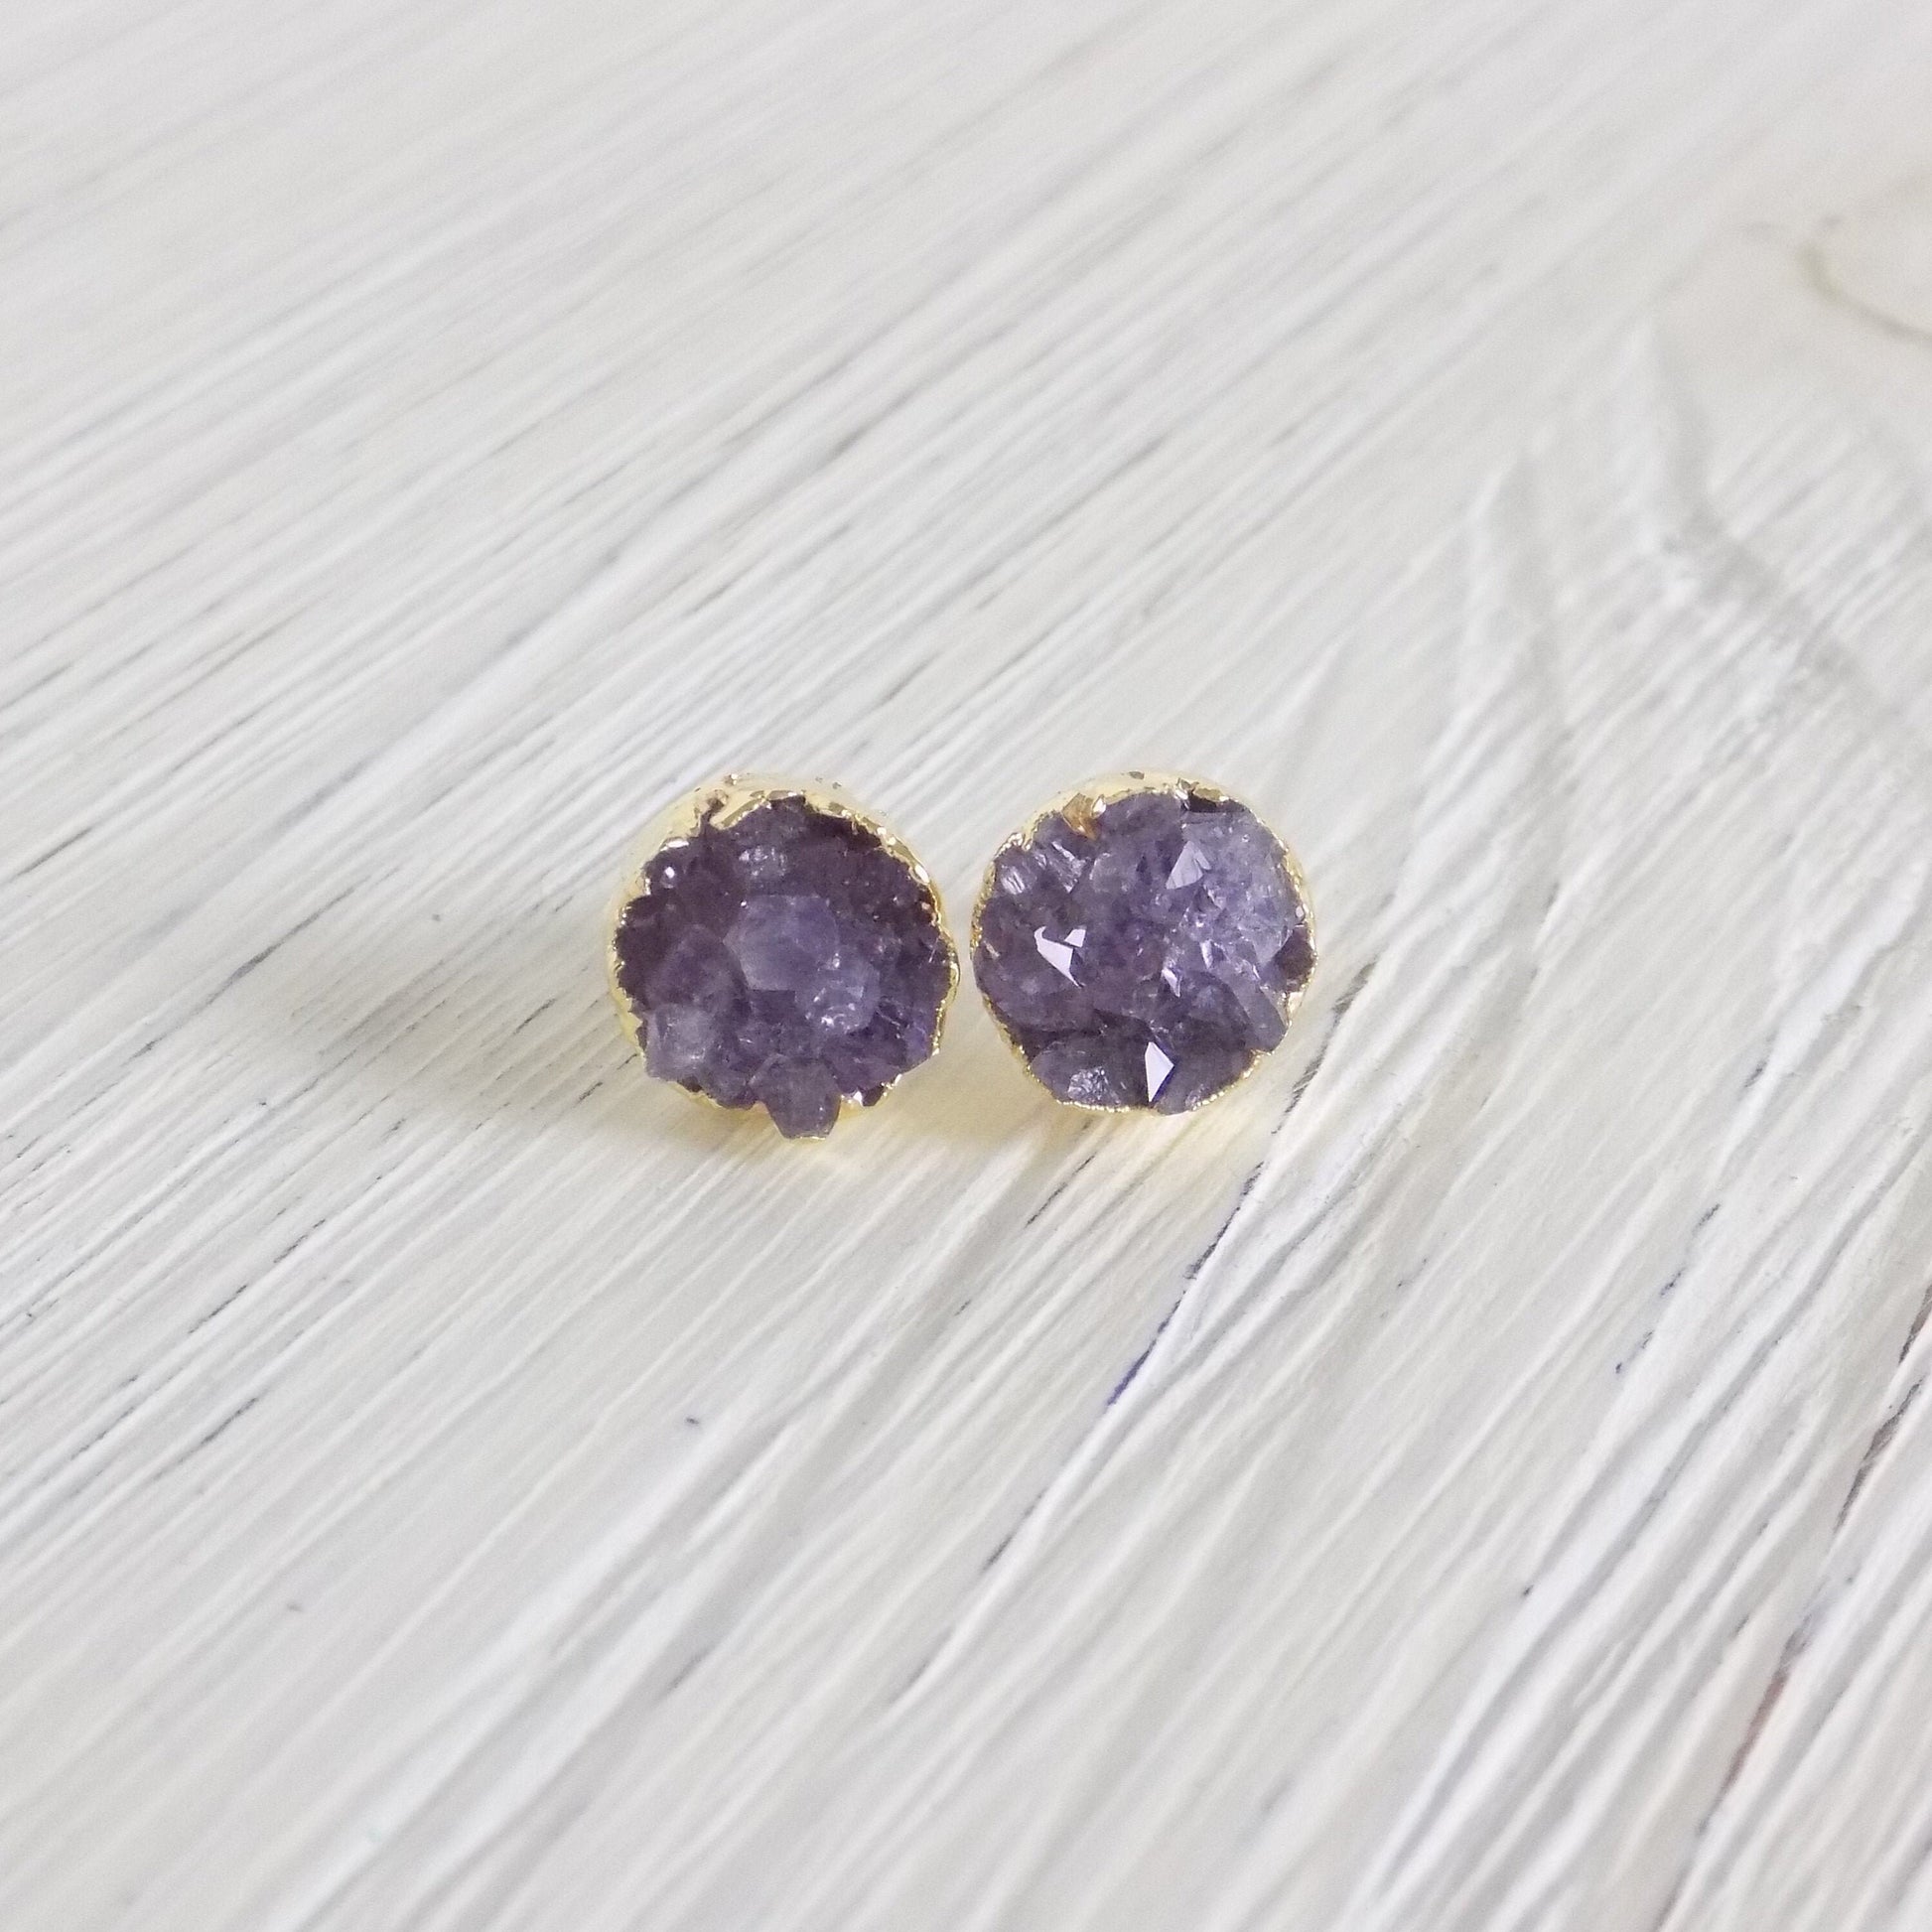 Purple Druzy Studs, Amethyst Druzy Earrings, Round Druzy Studs, Gemstone Earrings, Sparkly Druzy Studs, Drussy, Small Stone Posts, G7-316R